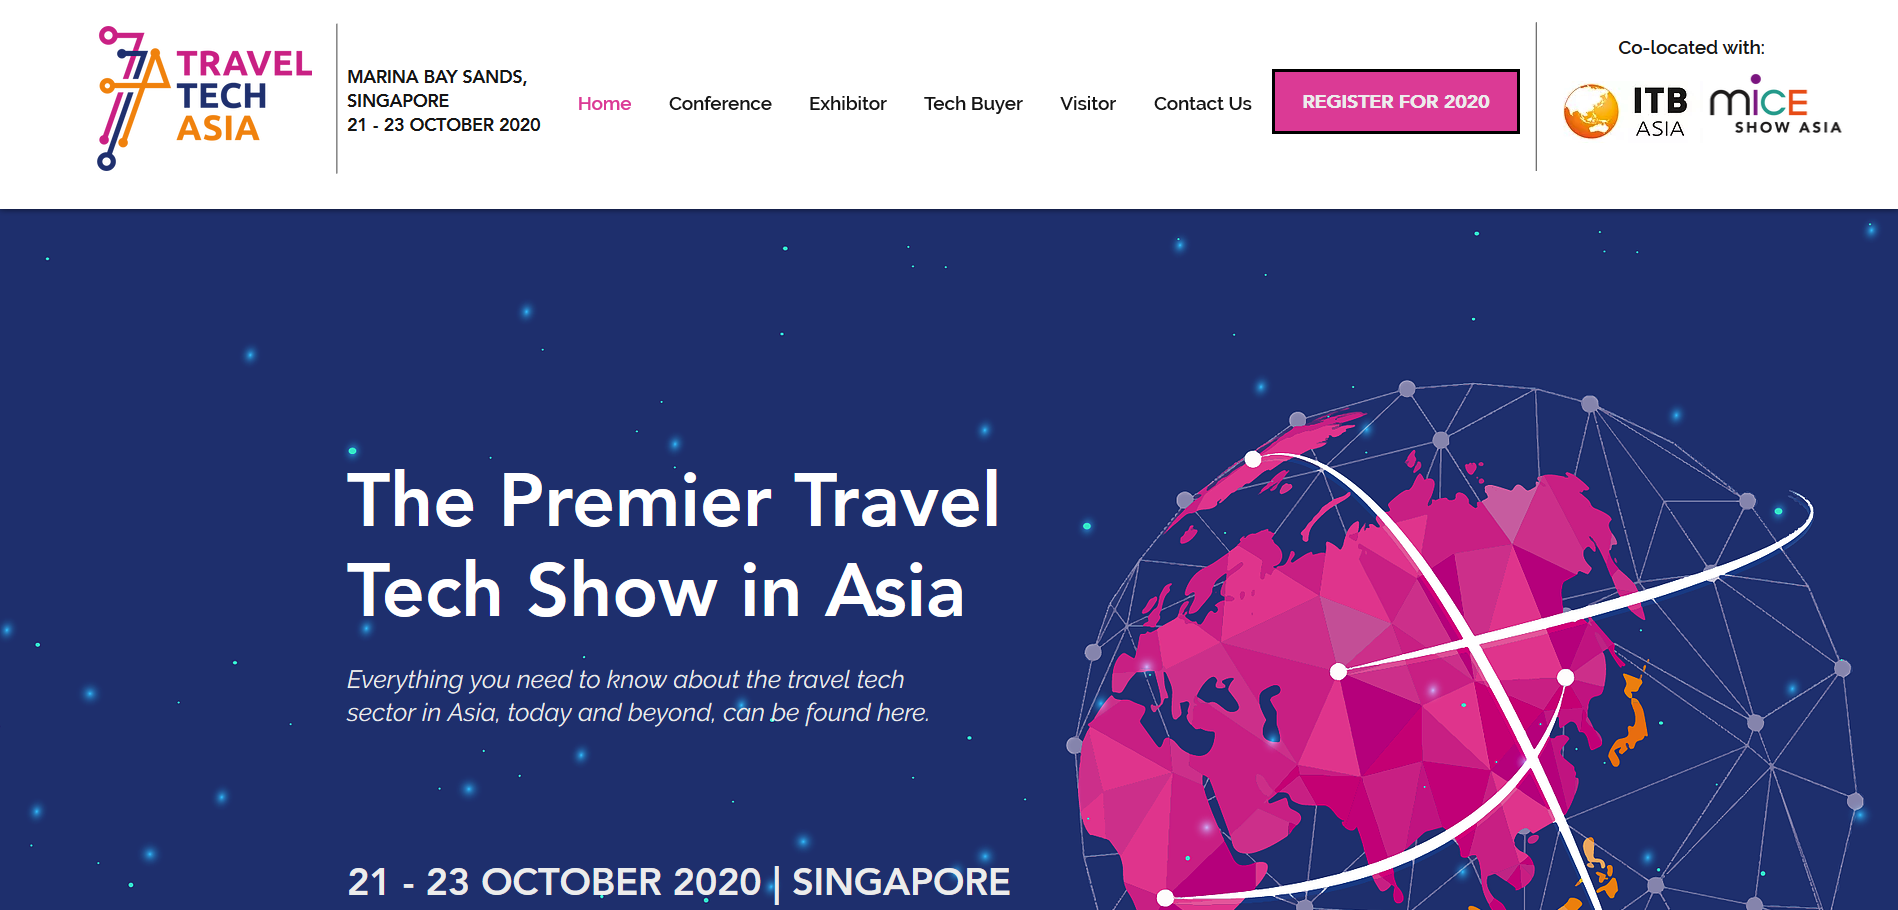 travel technology interactive asia pte. ltd